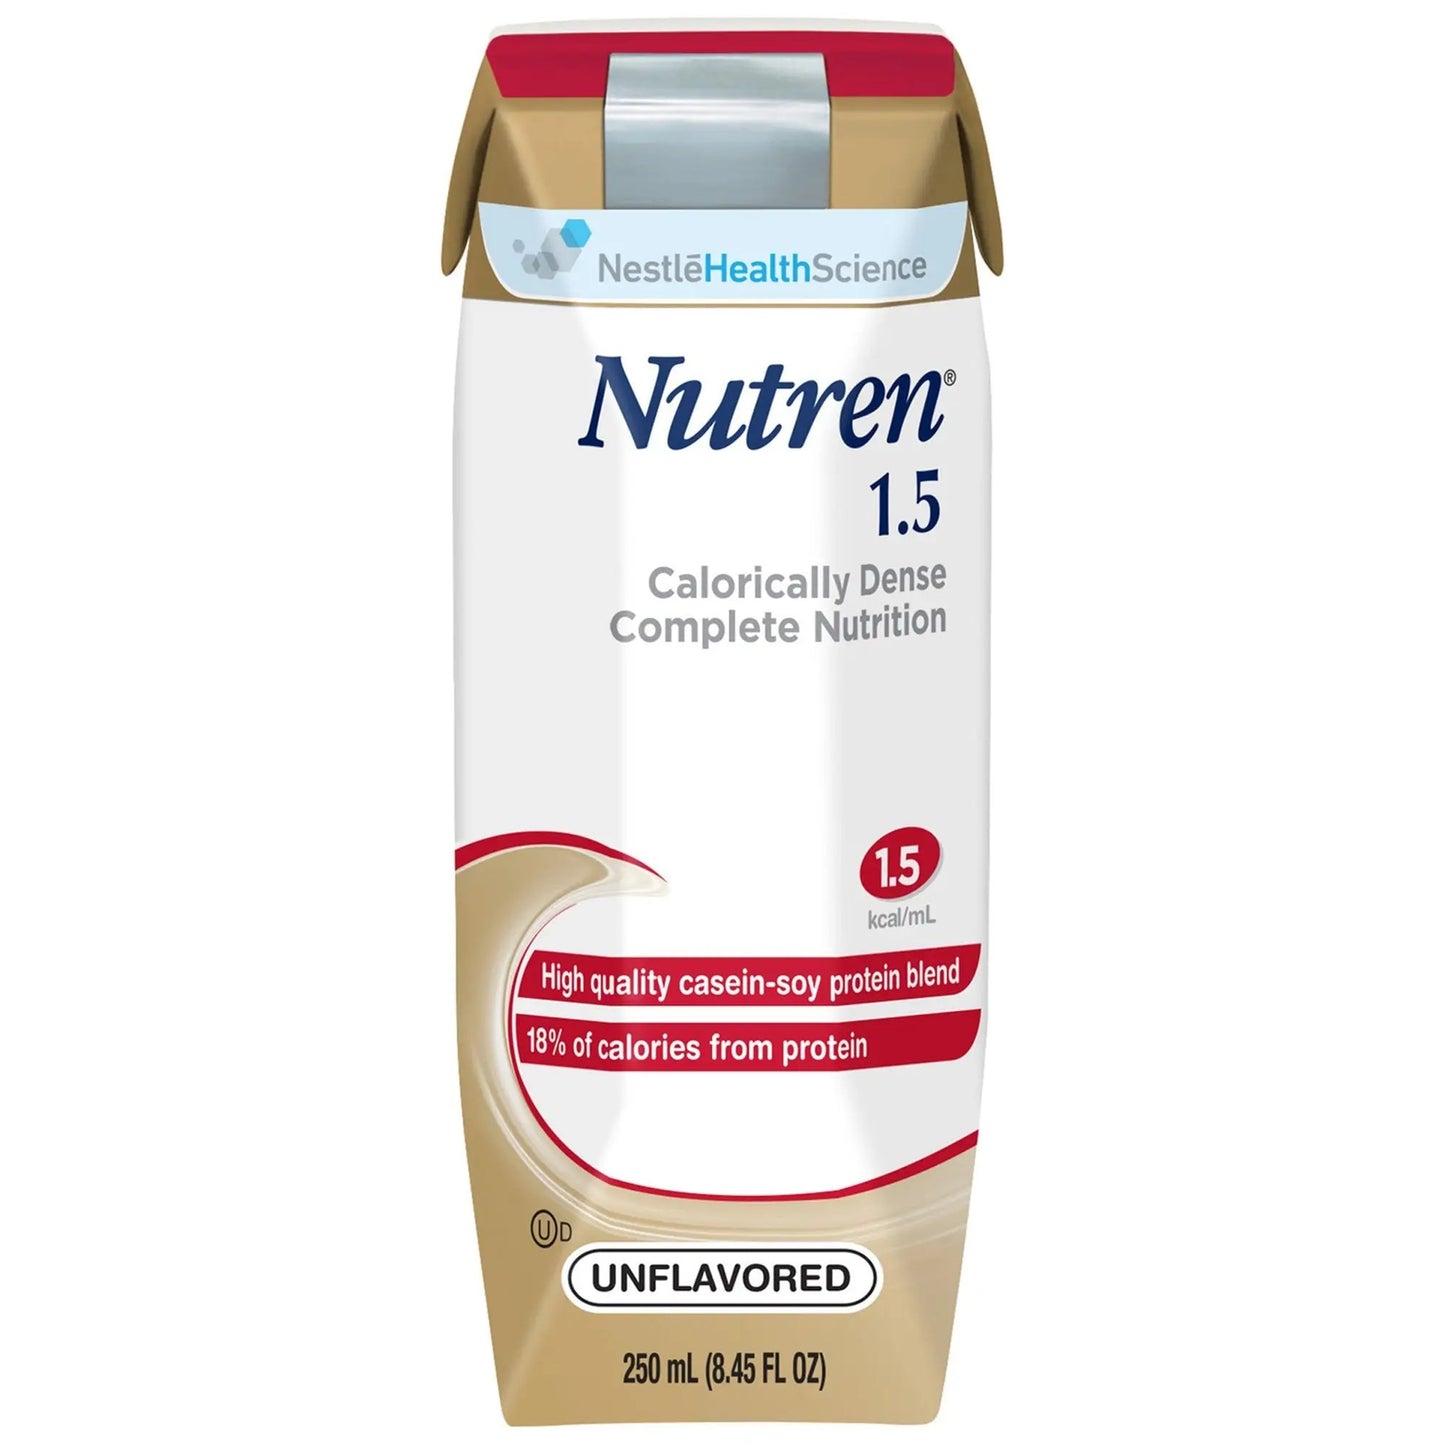 Nutren 1.5 Ready to Use Tube Feeding Formula, 8.45 oz. Carton